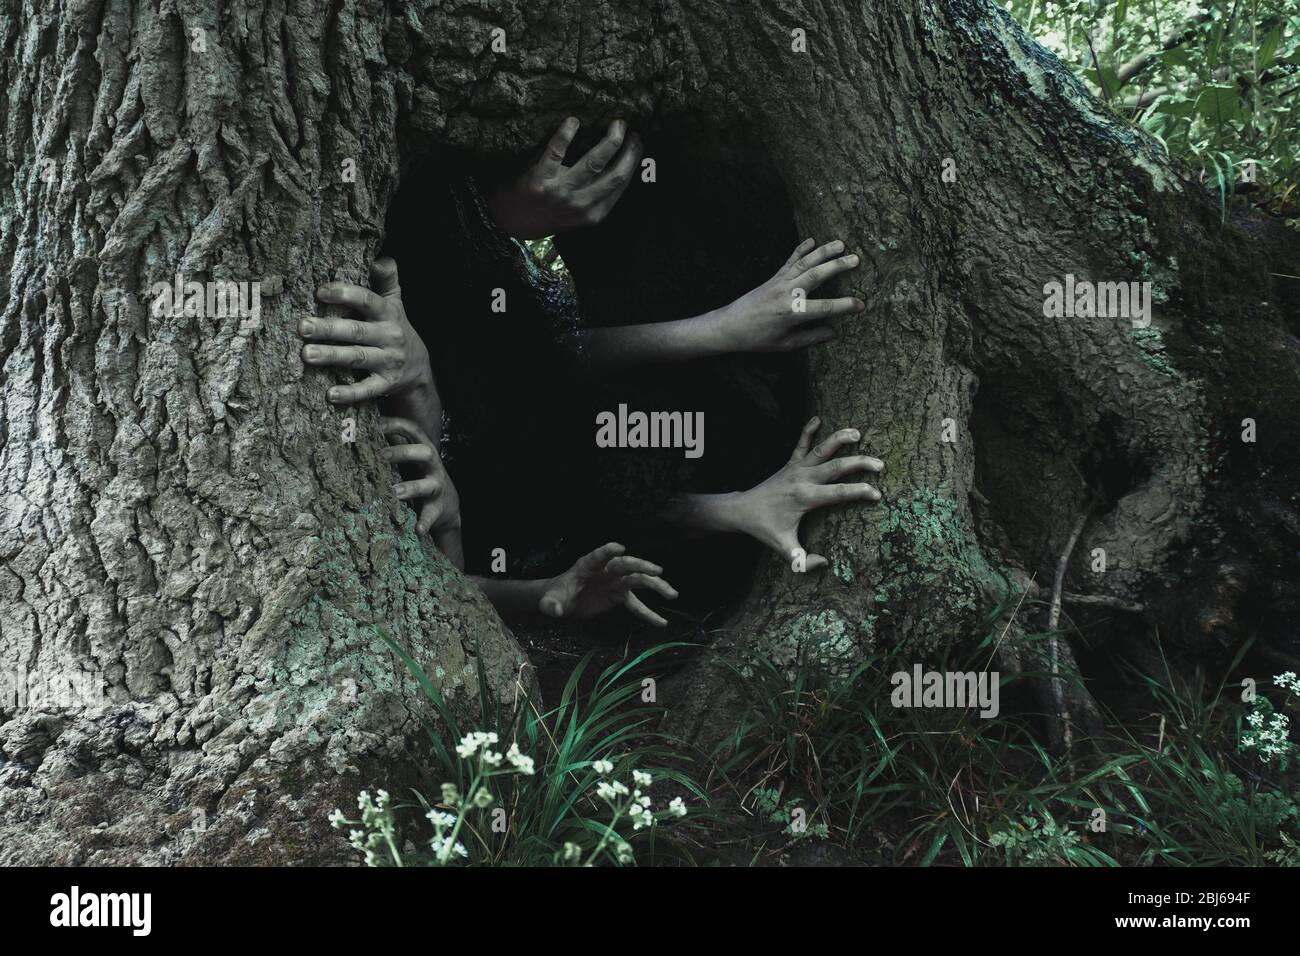 Un concept d'horreur de mains fantoeuses sortant de la base d'un arbre Banque D'Images